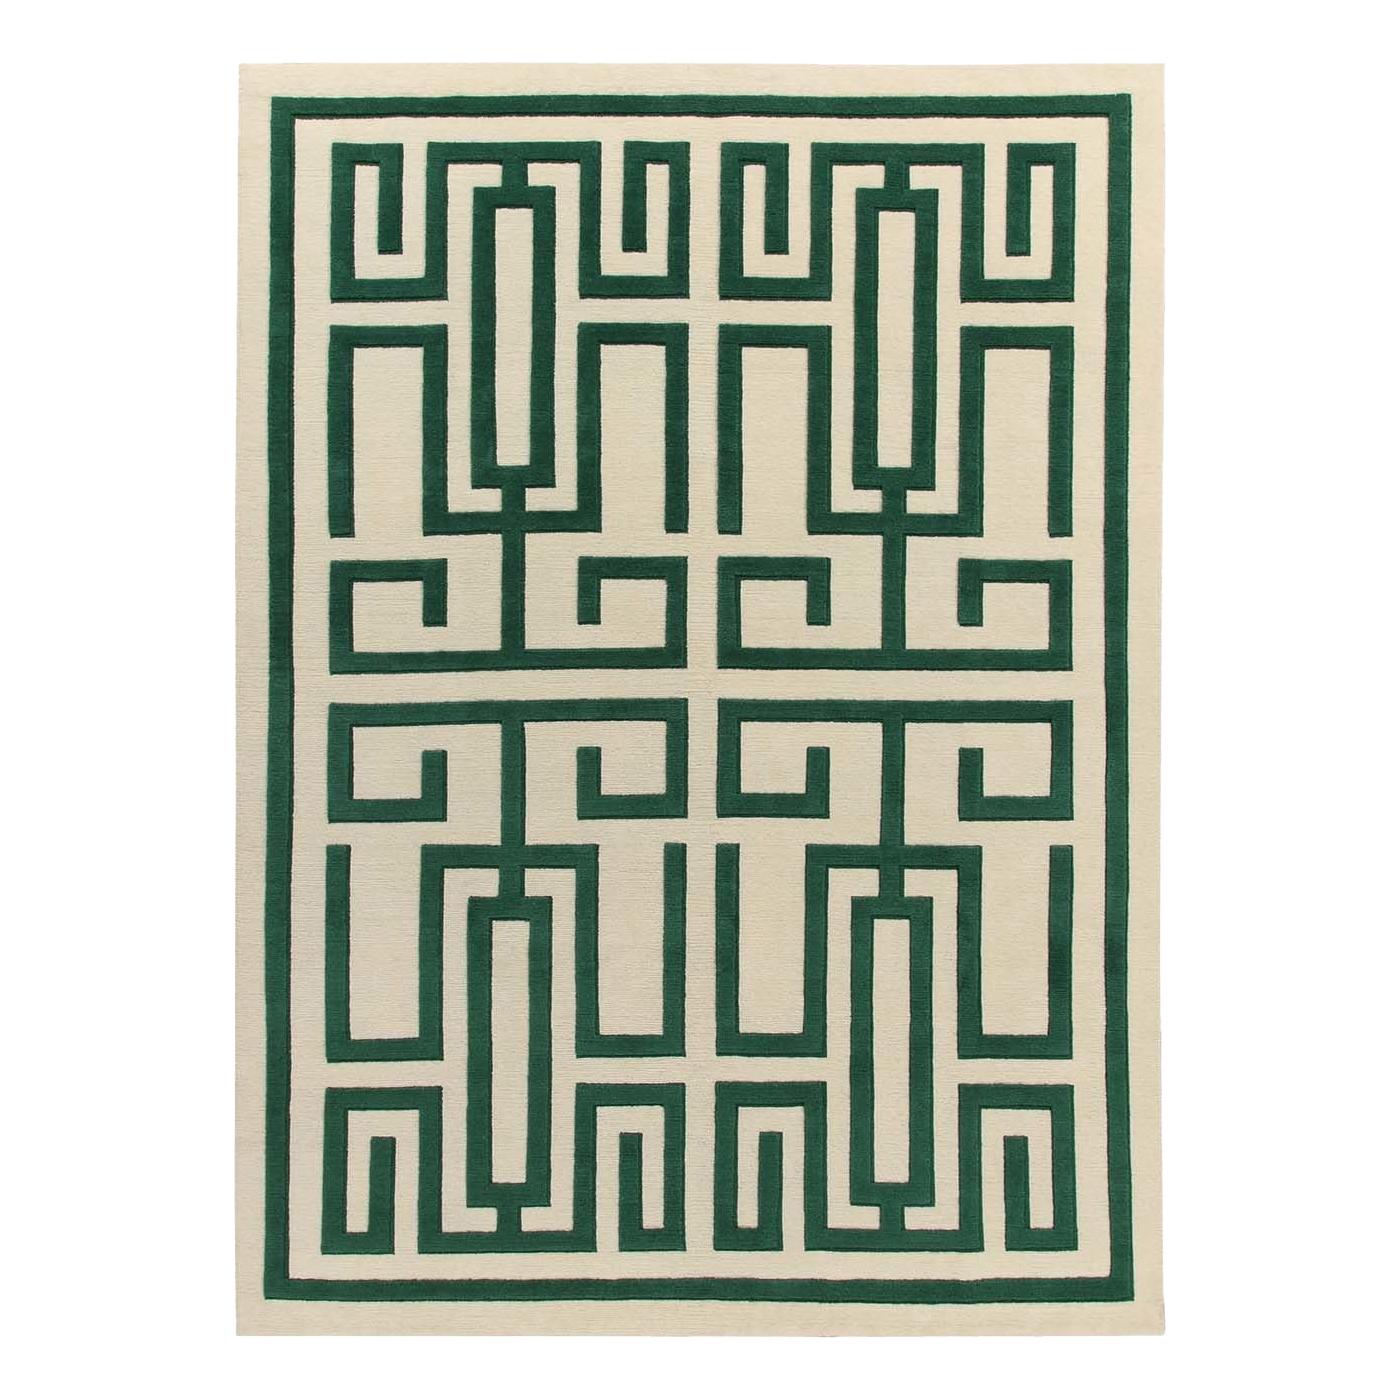 Labirinto Green Carpet by Gio Ponti